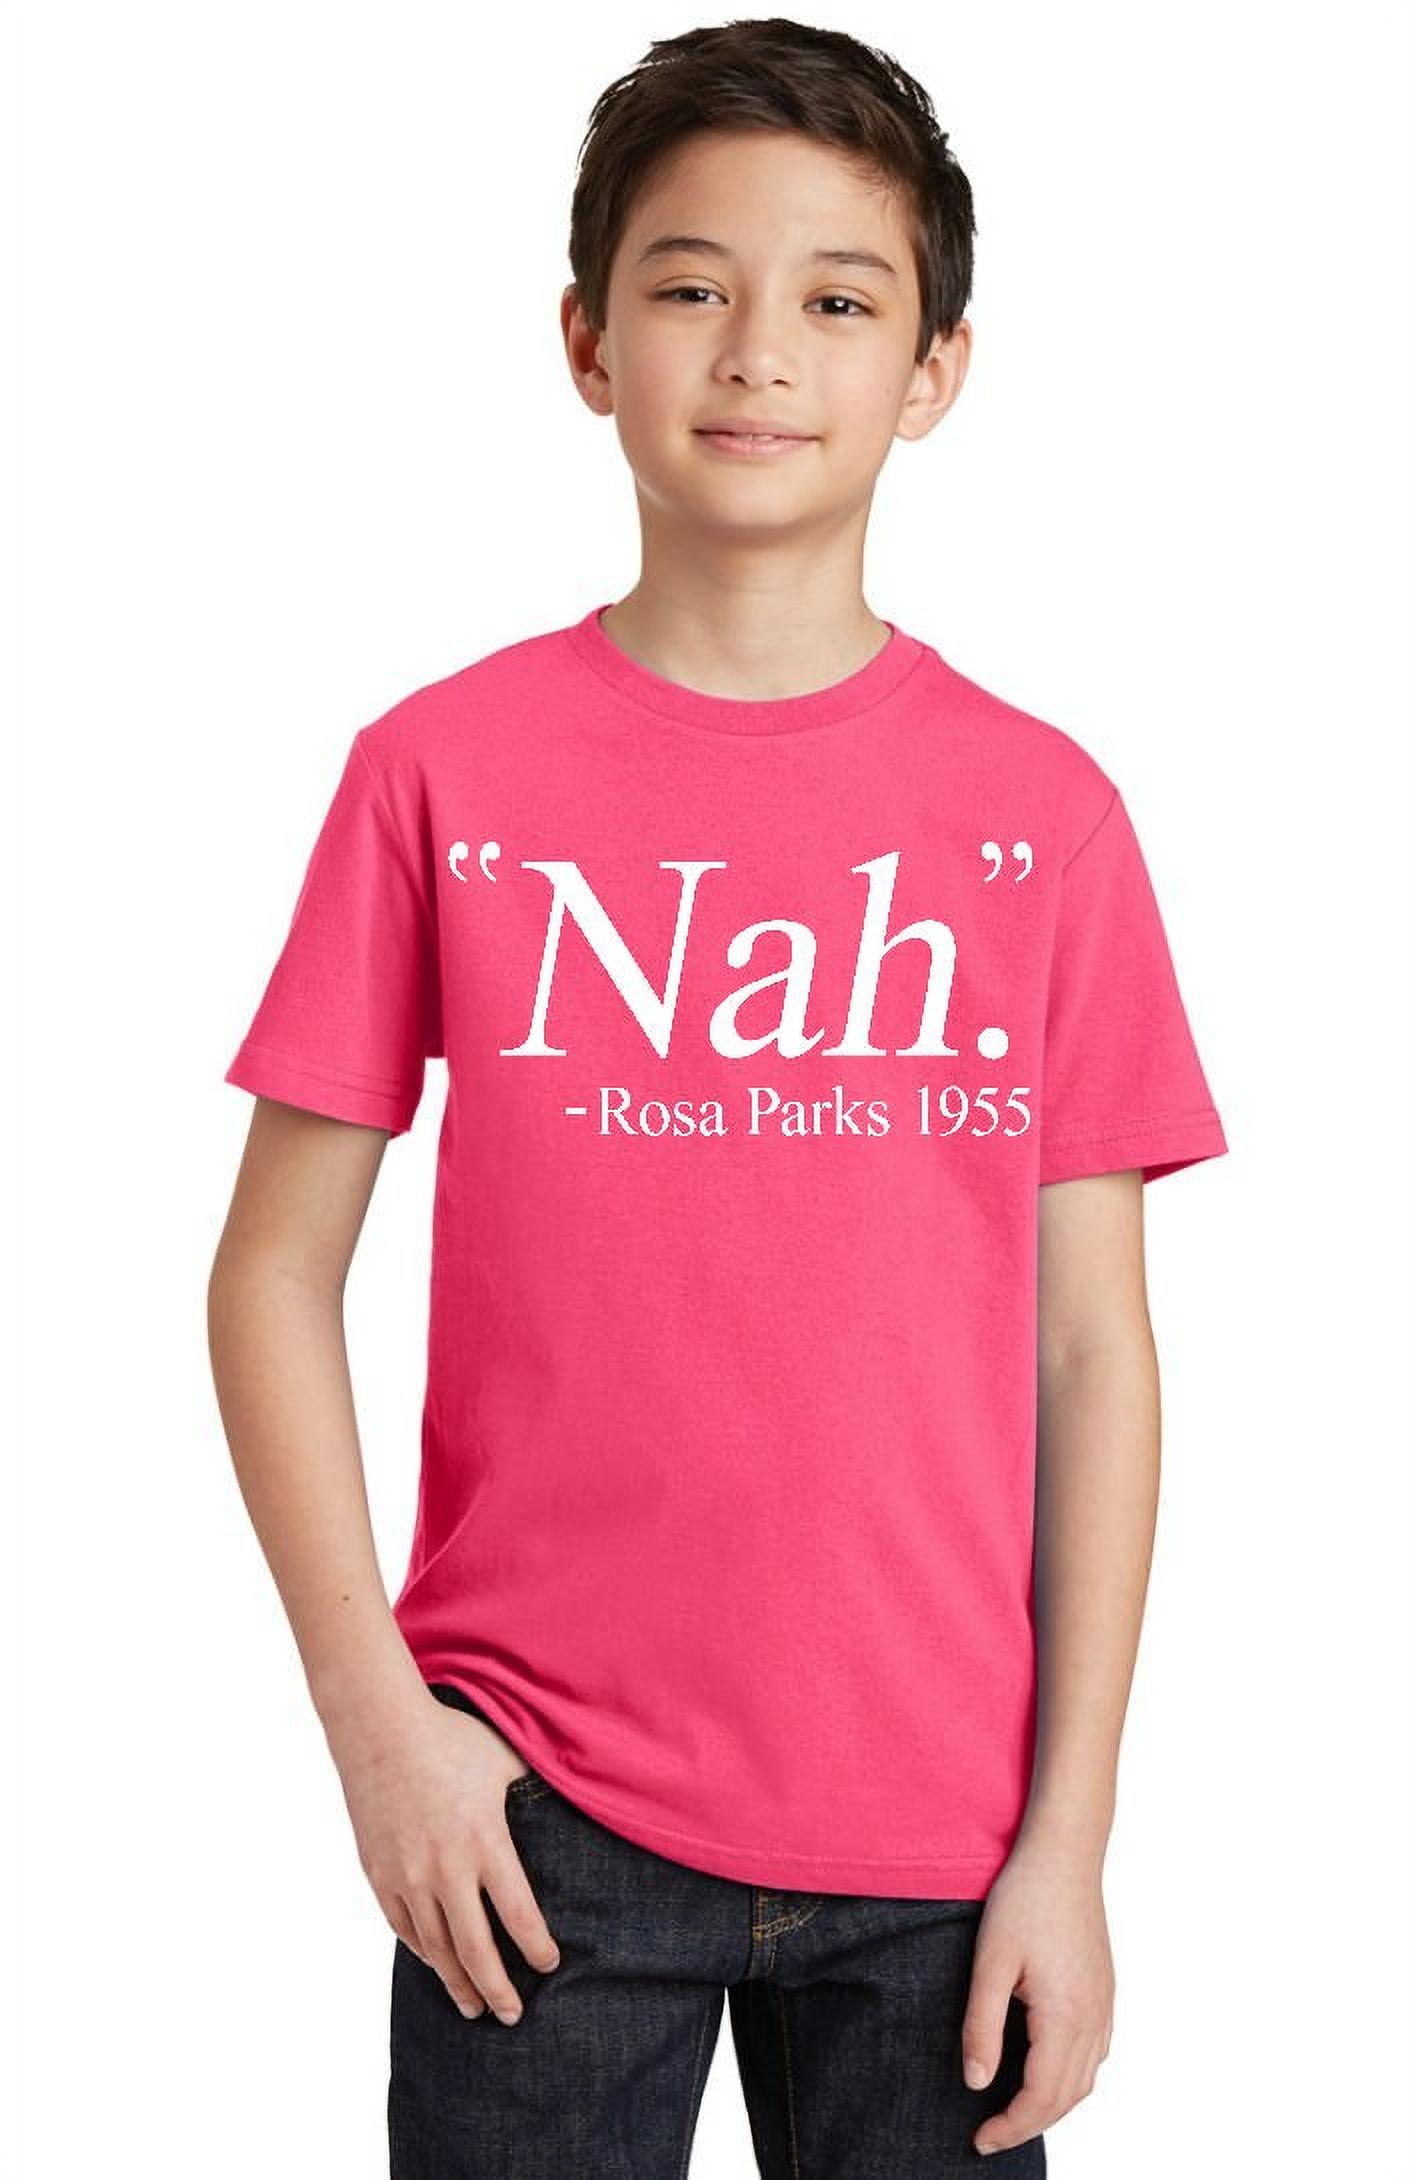 Nah. Rosa Parks 1955 Civil Rights Quote Youth T-shirt, Youth M, Royal